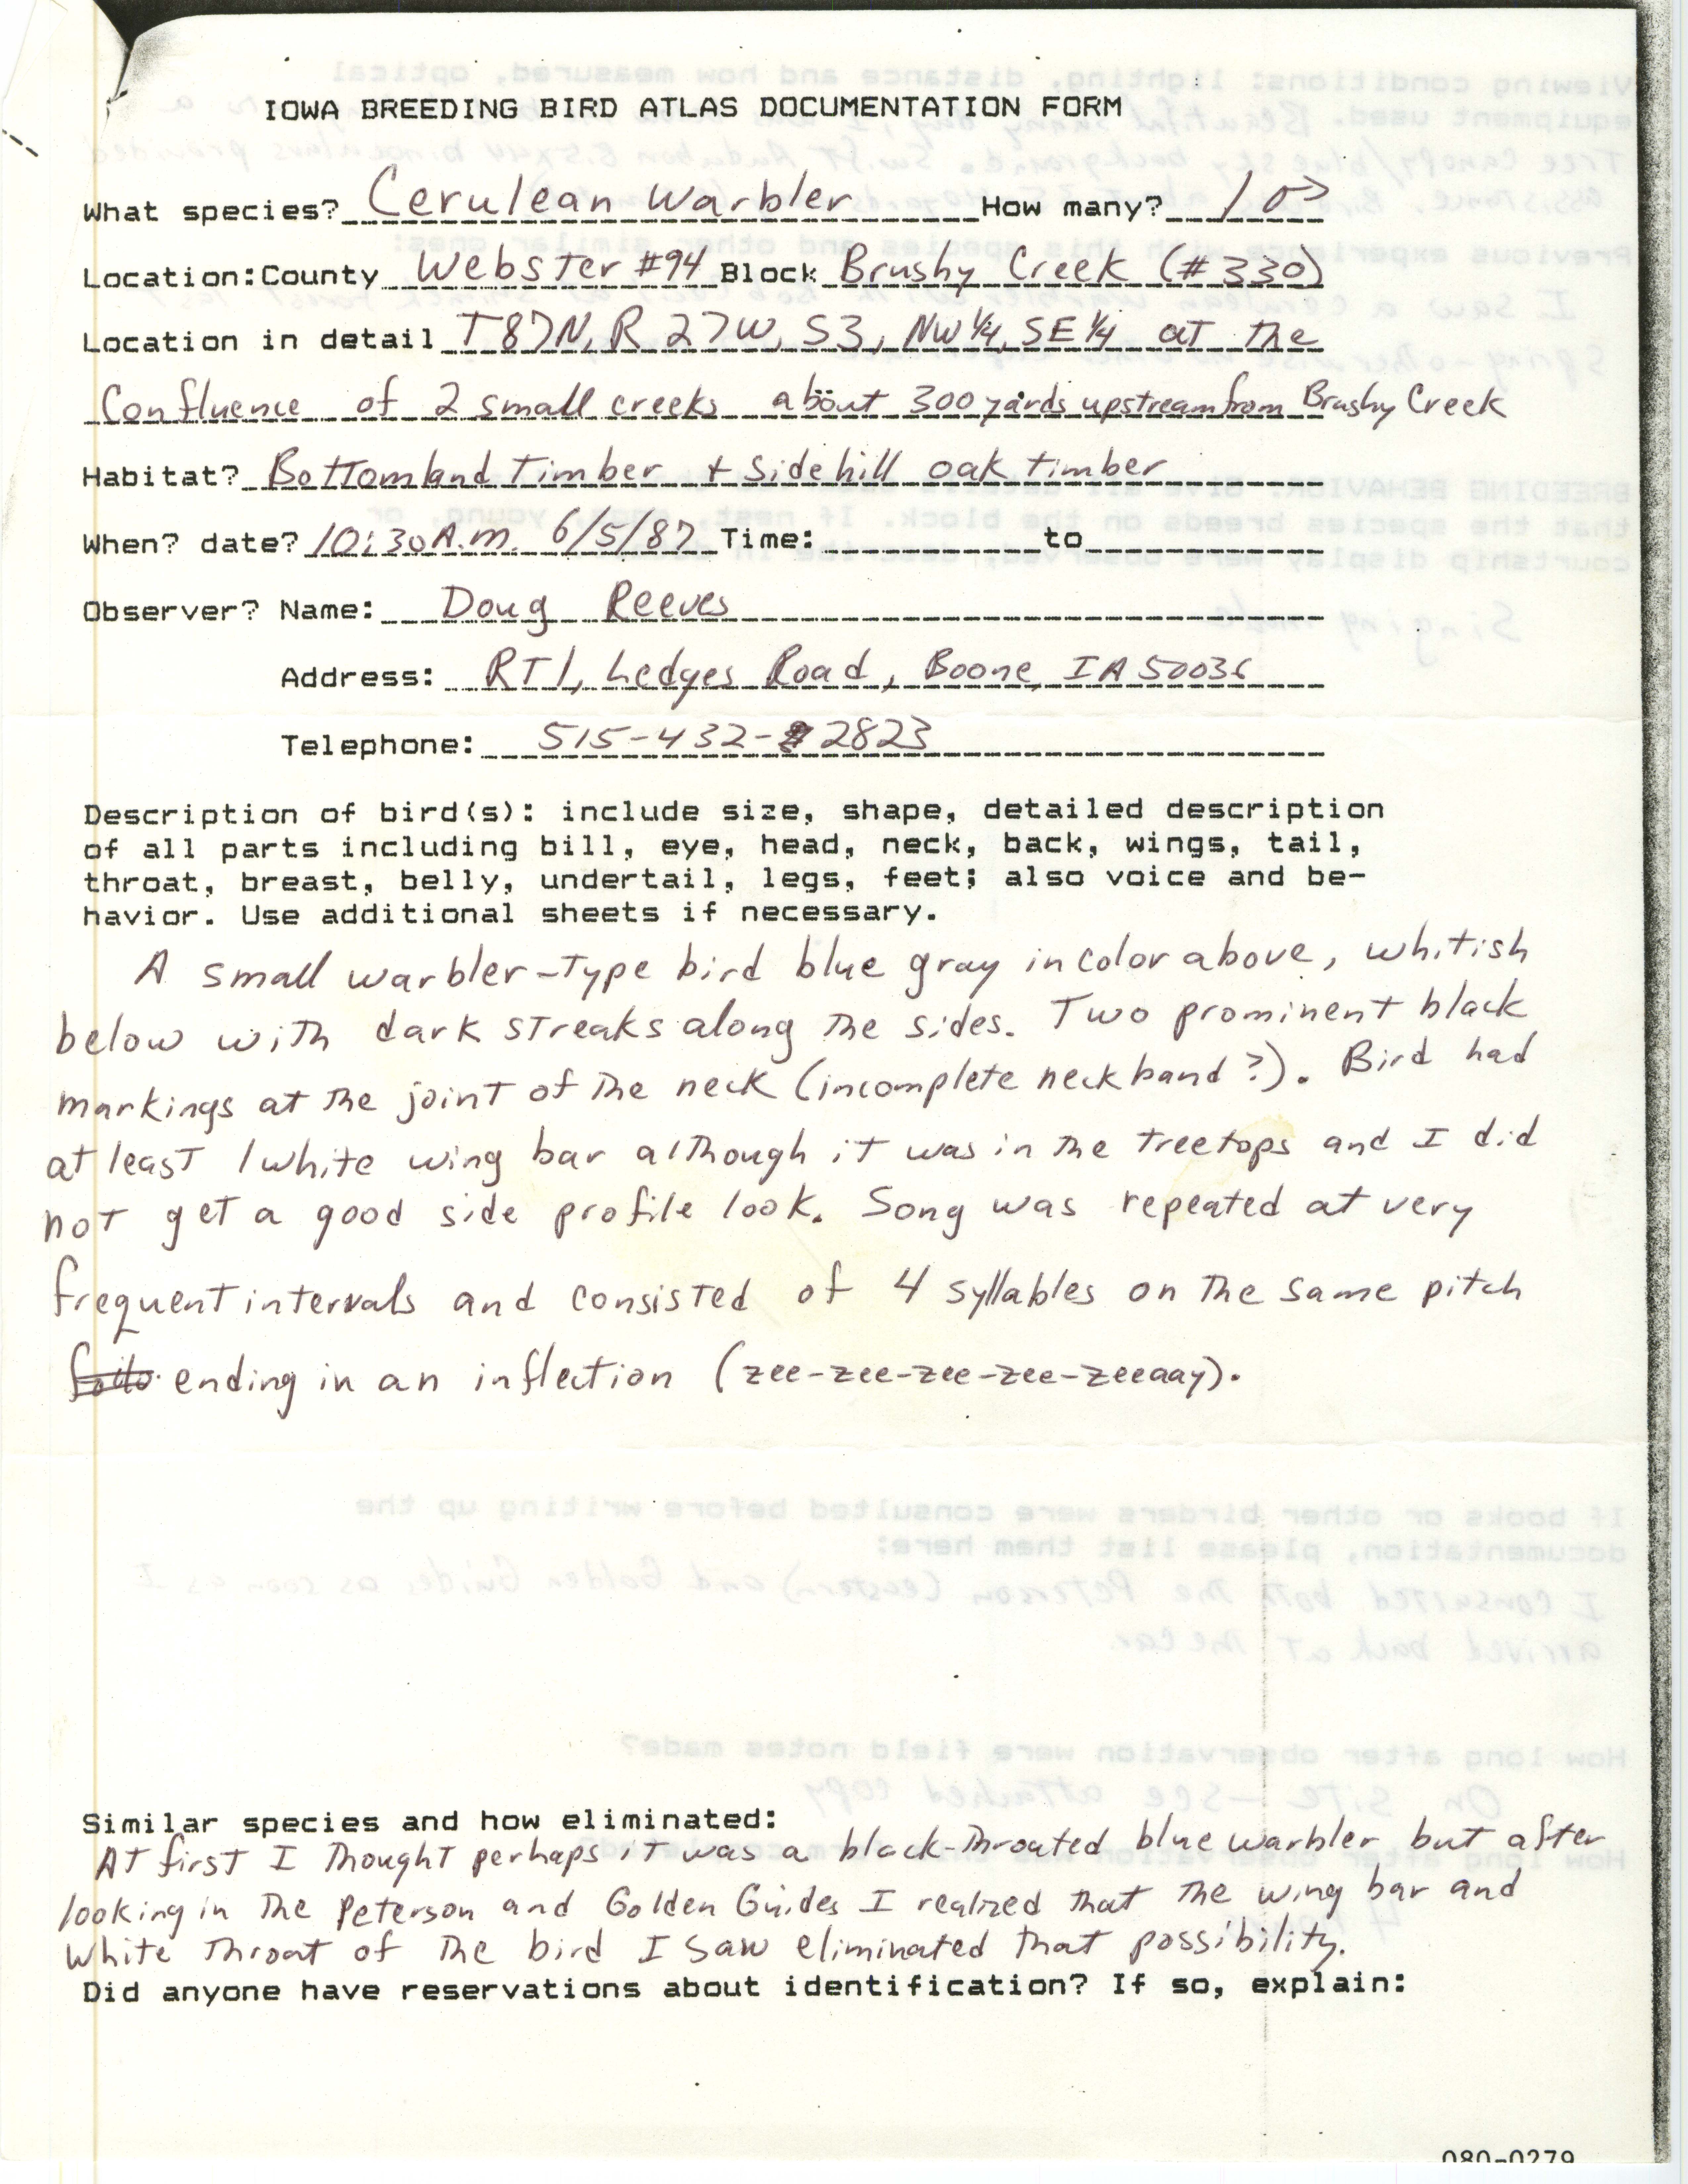 Iowa Breeding Bird Atlas documentation form, Doug Reeves, June 5, 1987